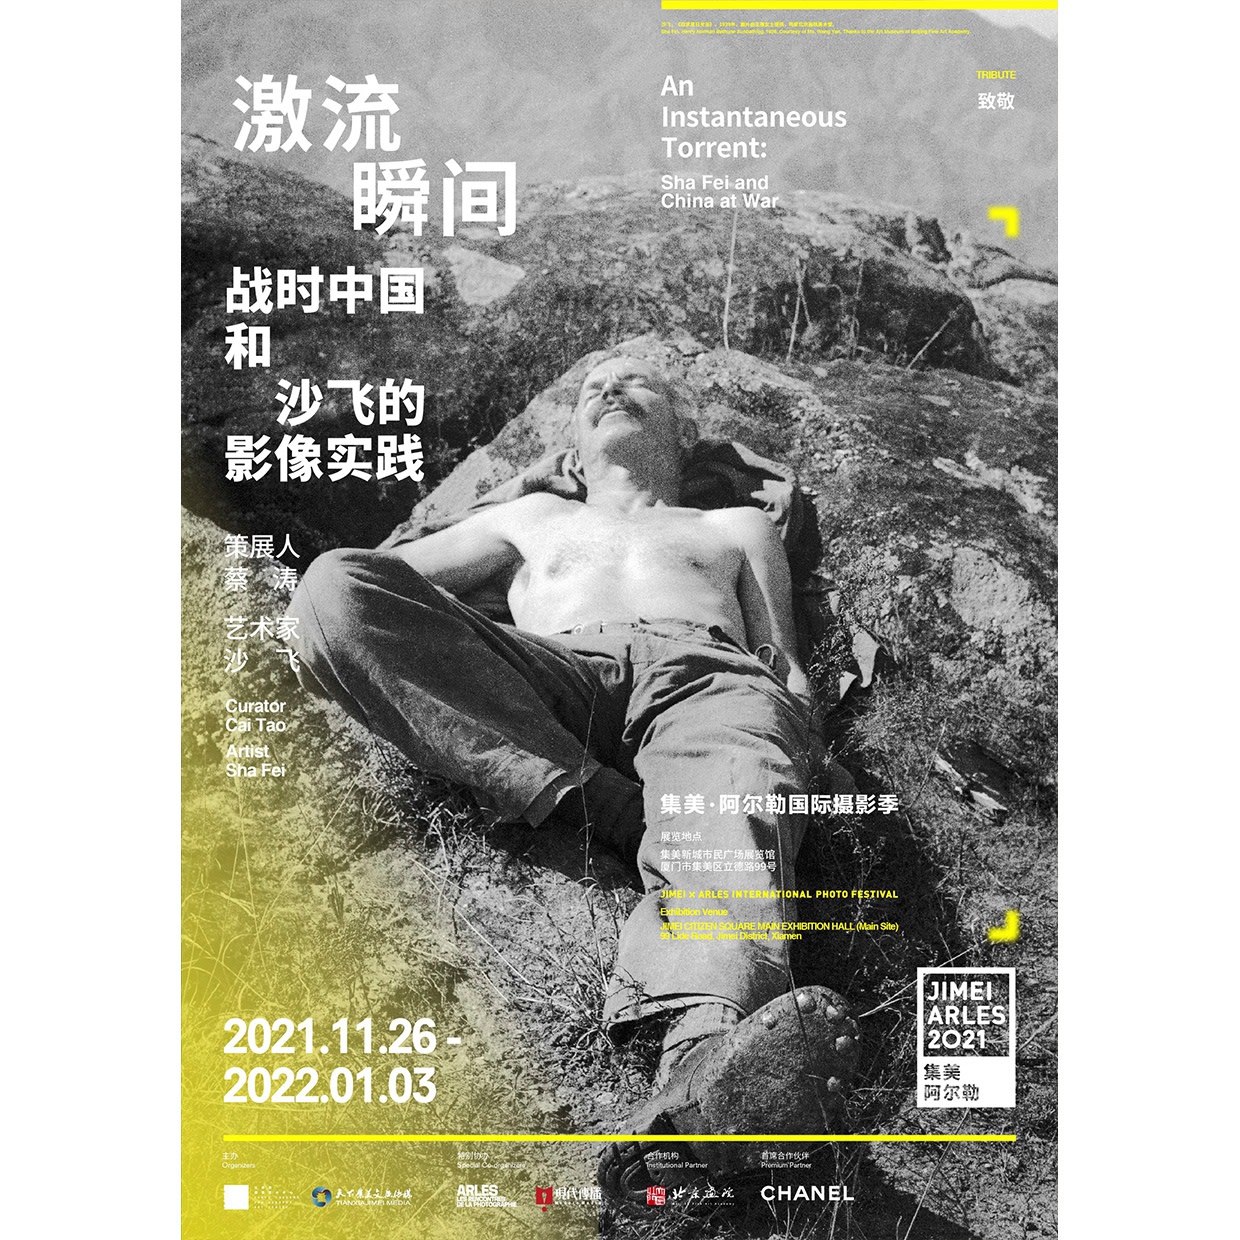 An Instantaneous Torrent: Sha Fei and China at War Artists: Sha Fei Curator: Cai Tao The Jimei x Arles International...